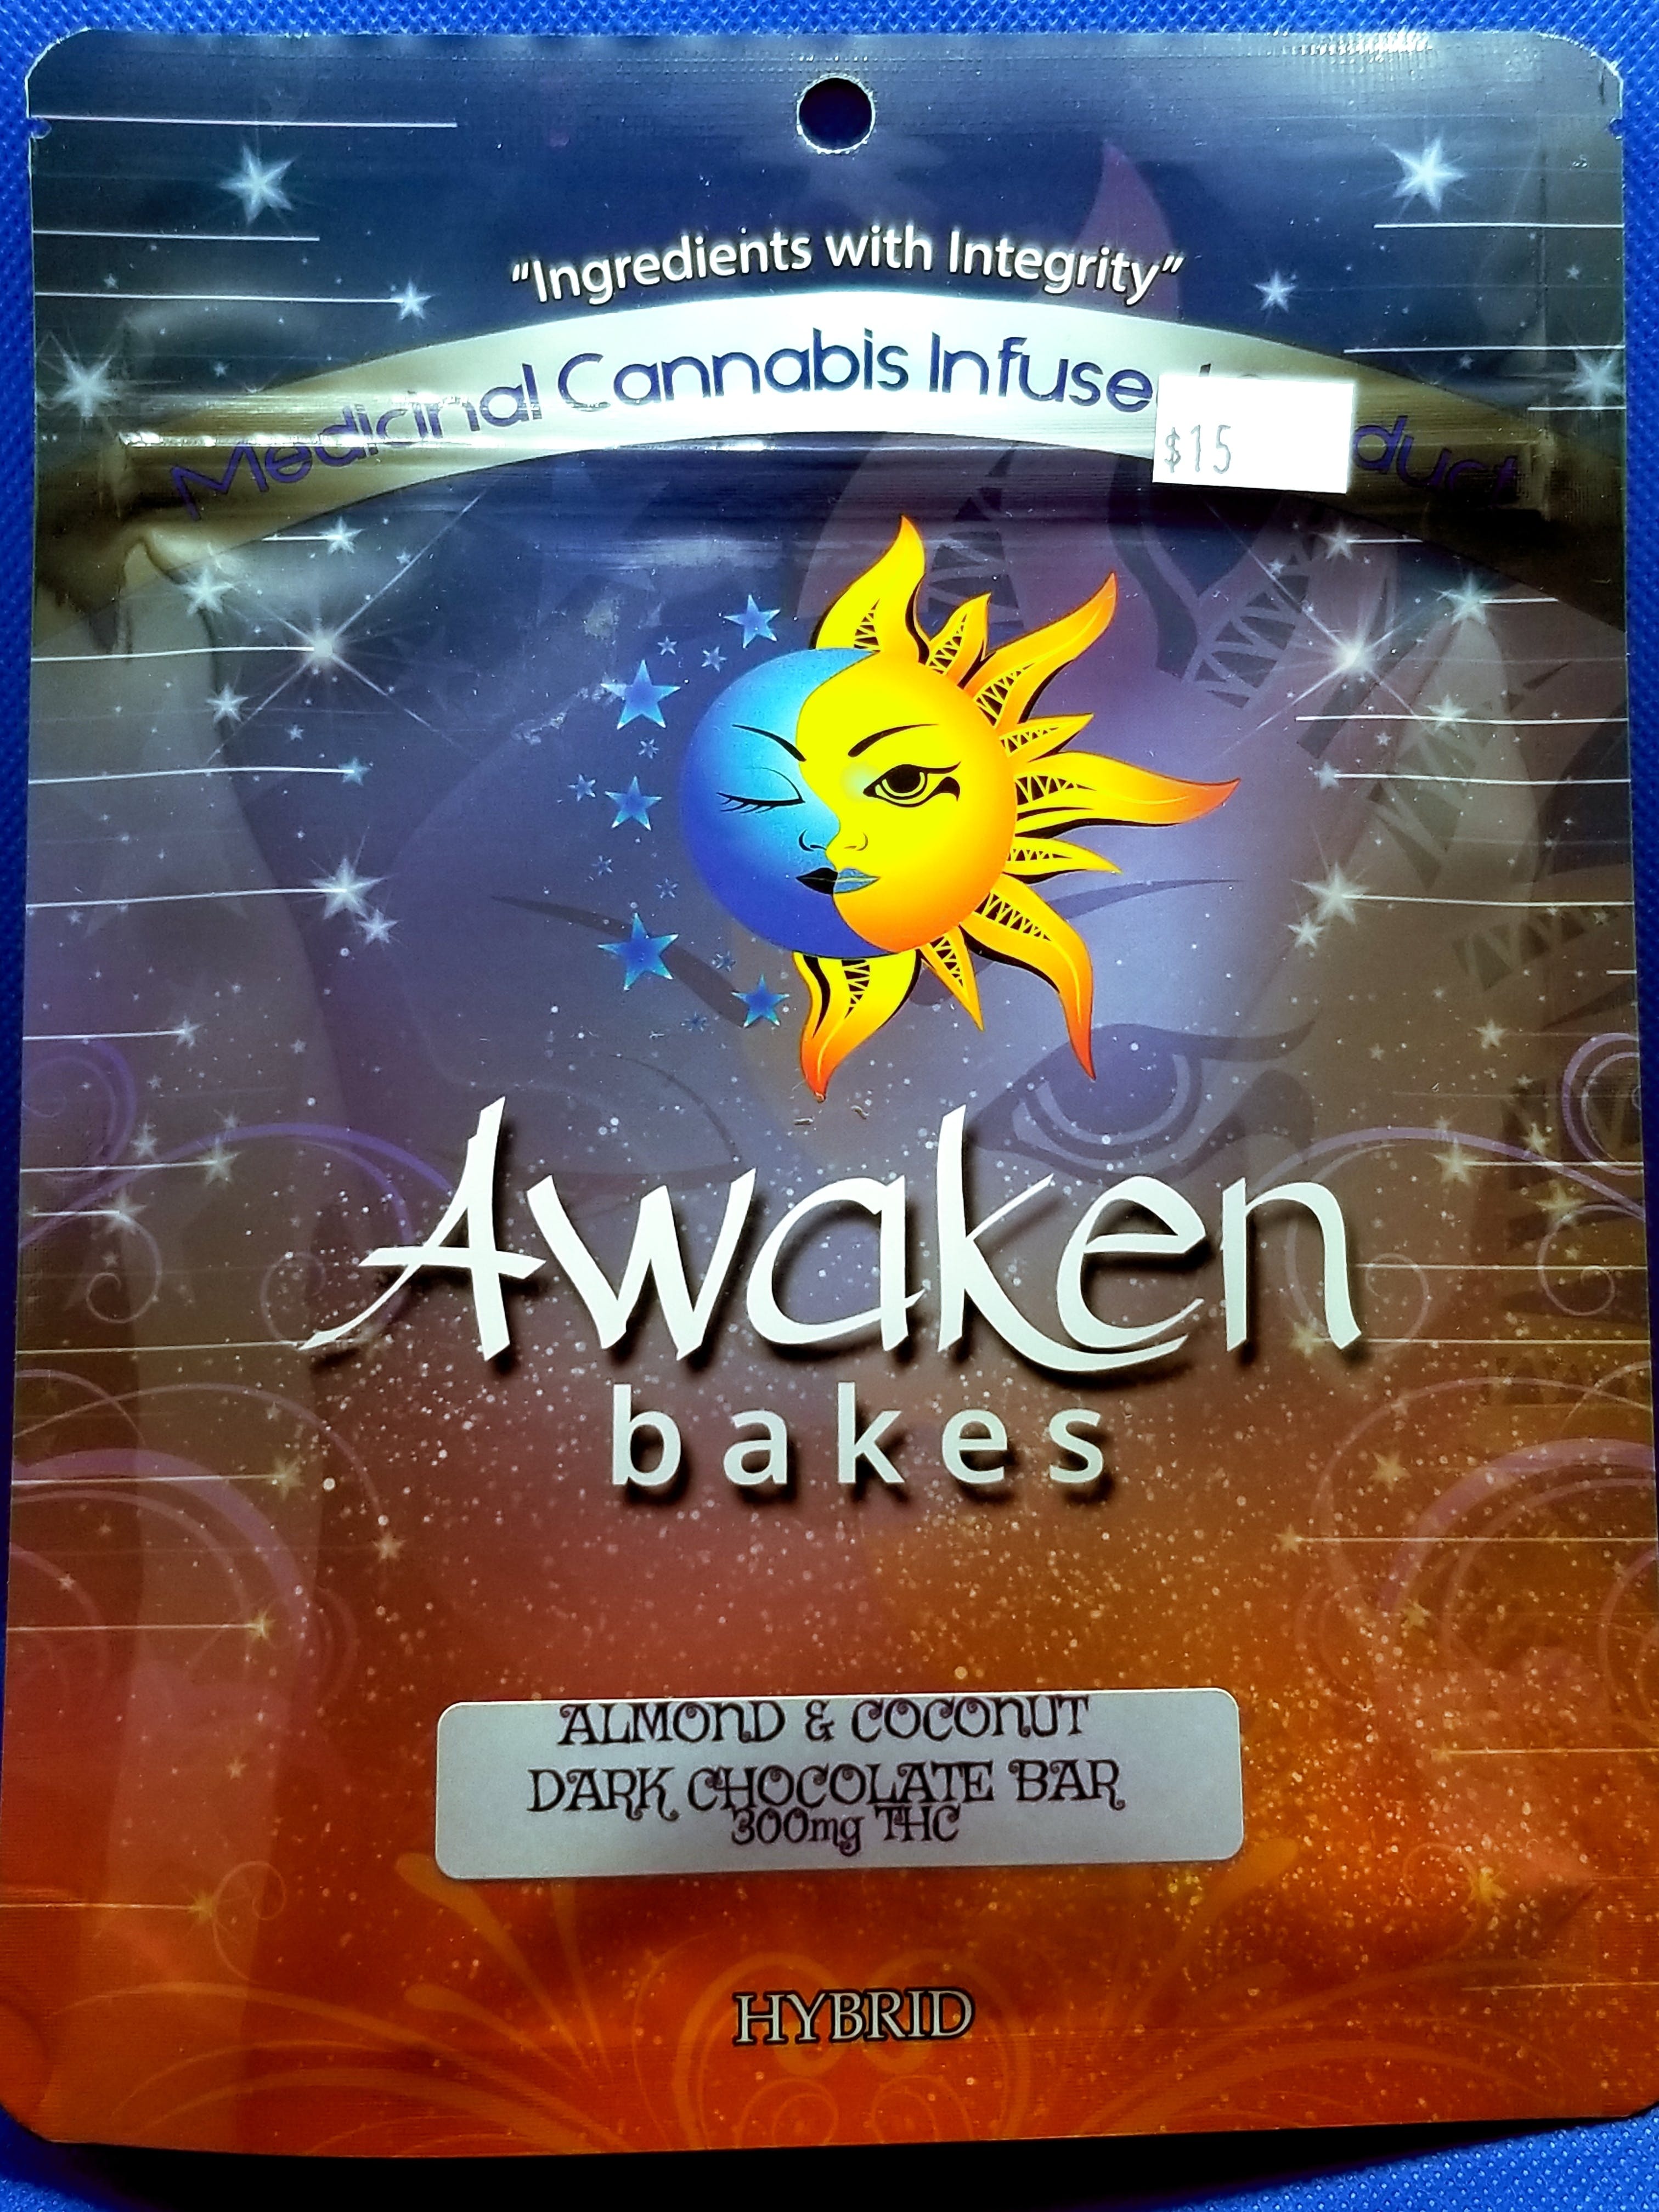 marijuana-dispensaries-1609-east-chapman-ave-orange-awaken-bakes-almond-and-coconut-dark-chocolate-bar-300mg-hybrid